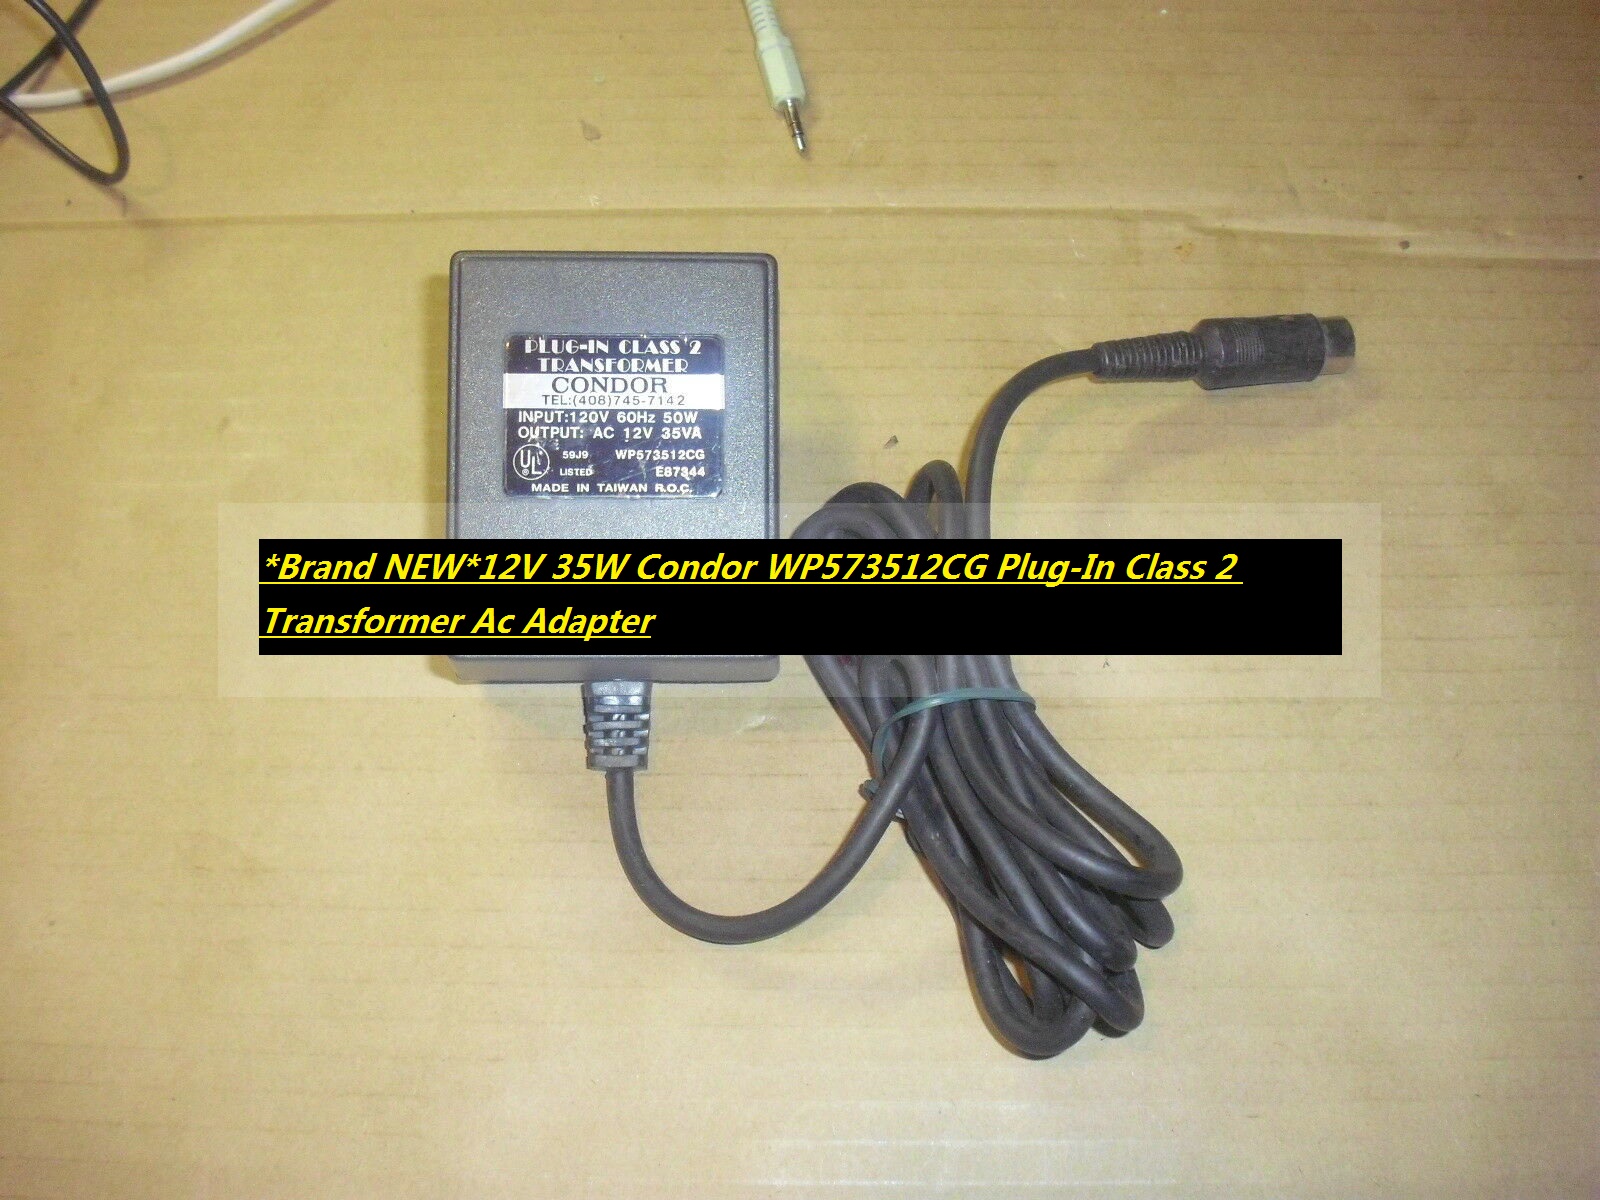 *Brand NEW*12V 35W Condor WP573512CG Plug-In Class 2 Transformer Ac Adapter - Click Image to Close